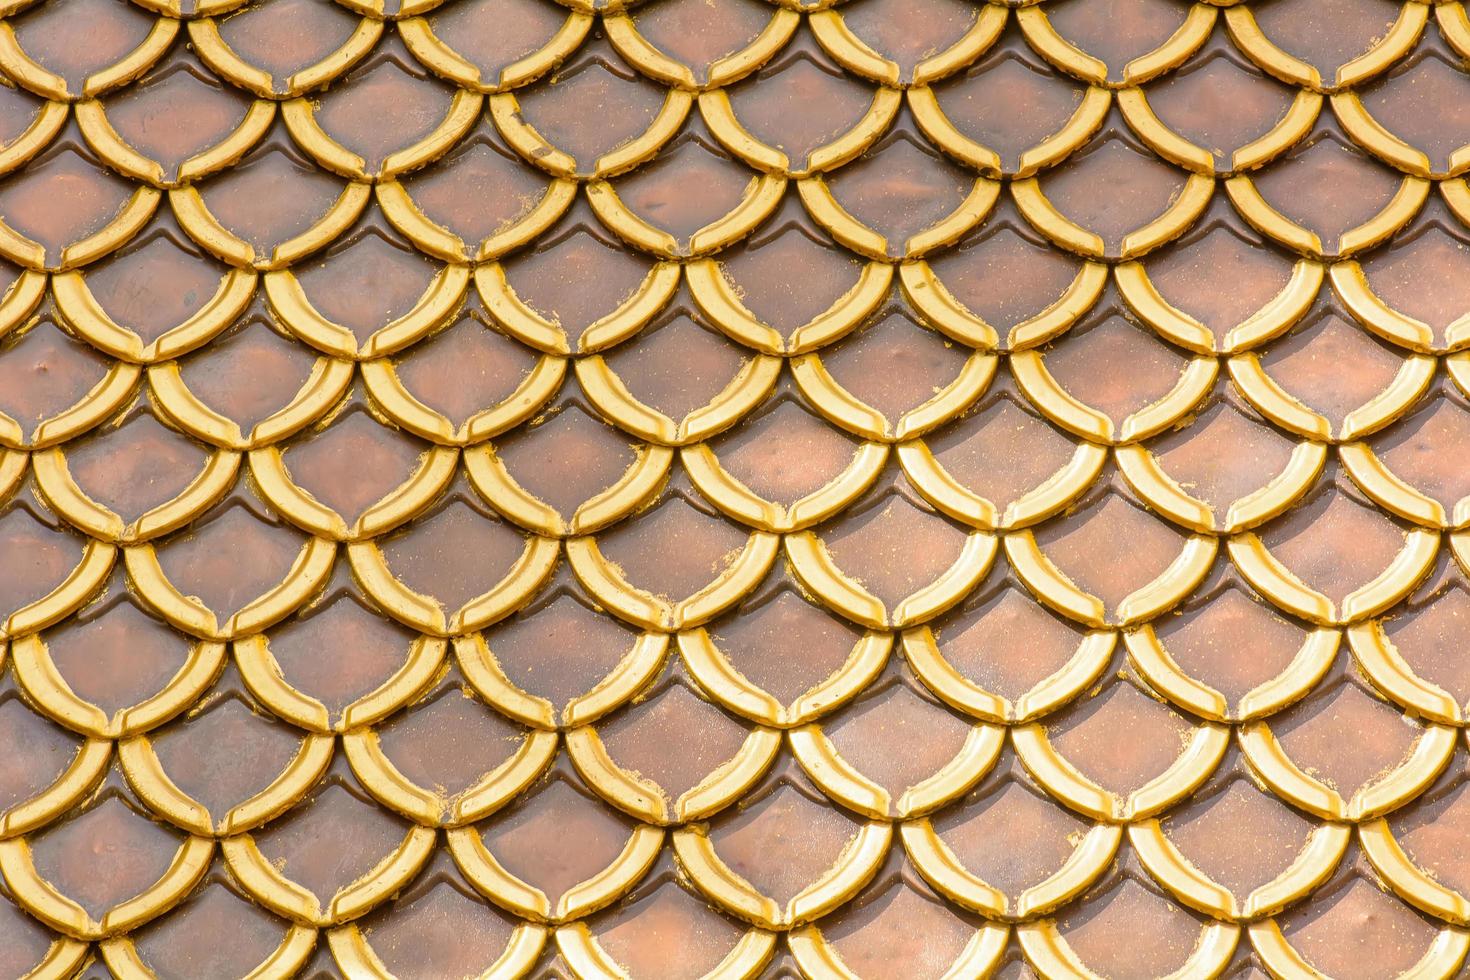 Roof tiles texture photo